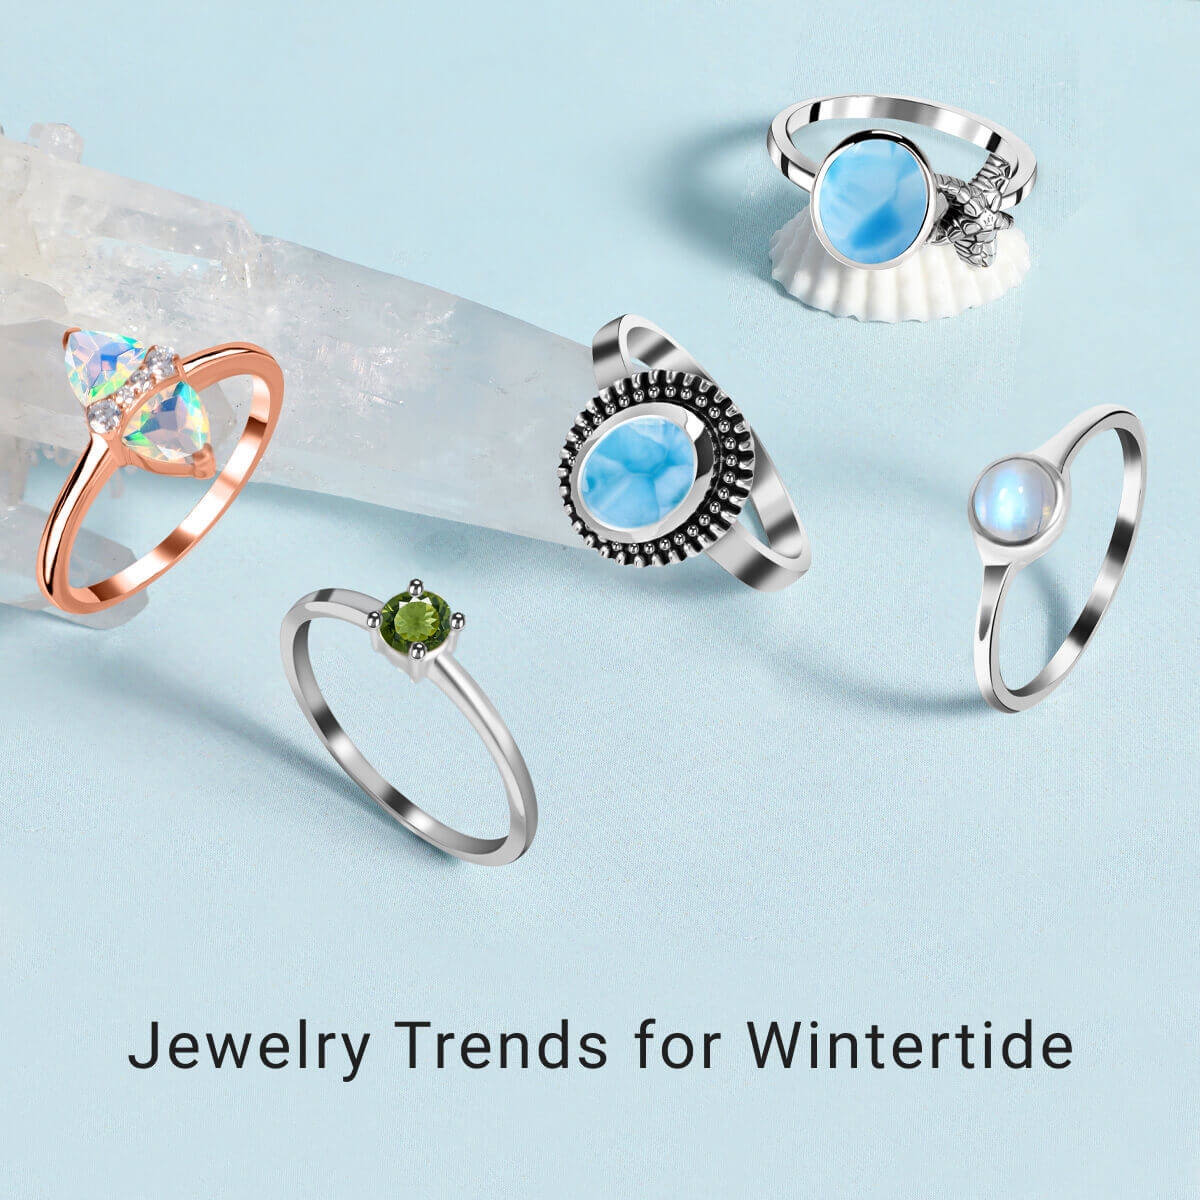 Winter Fashion Jewelry Trends